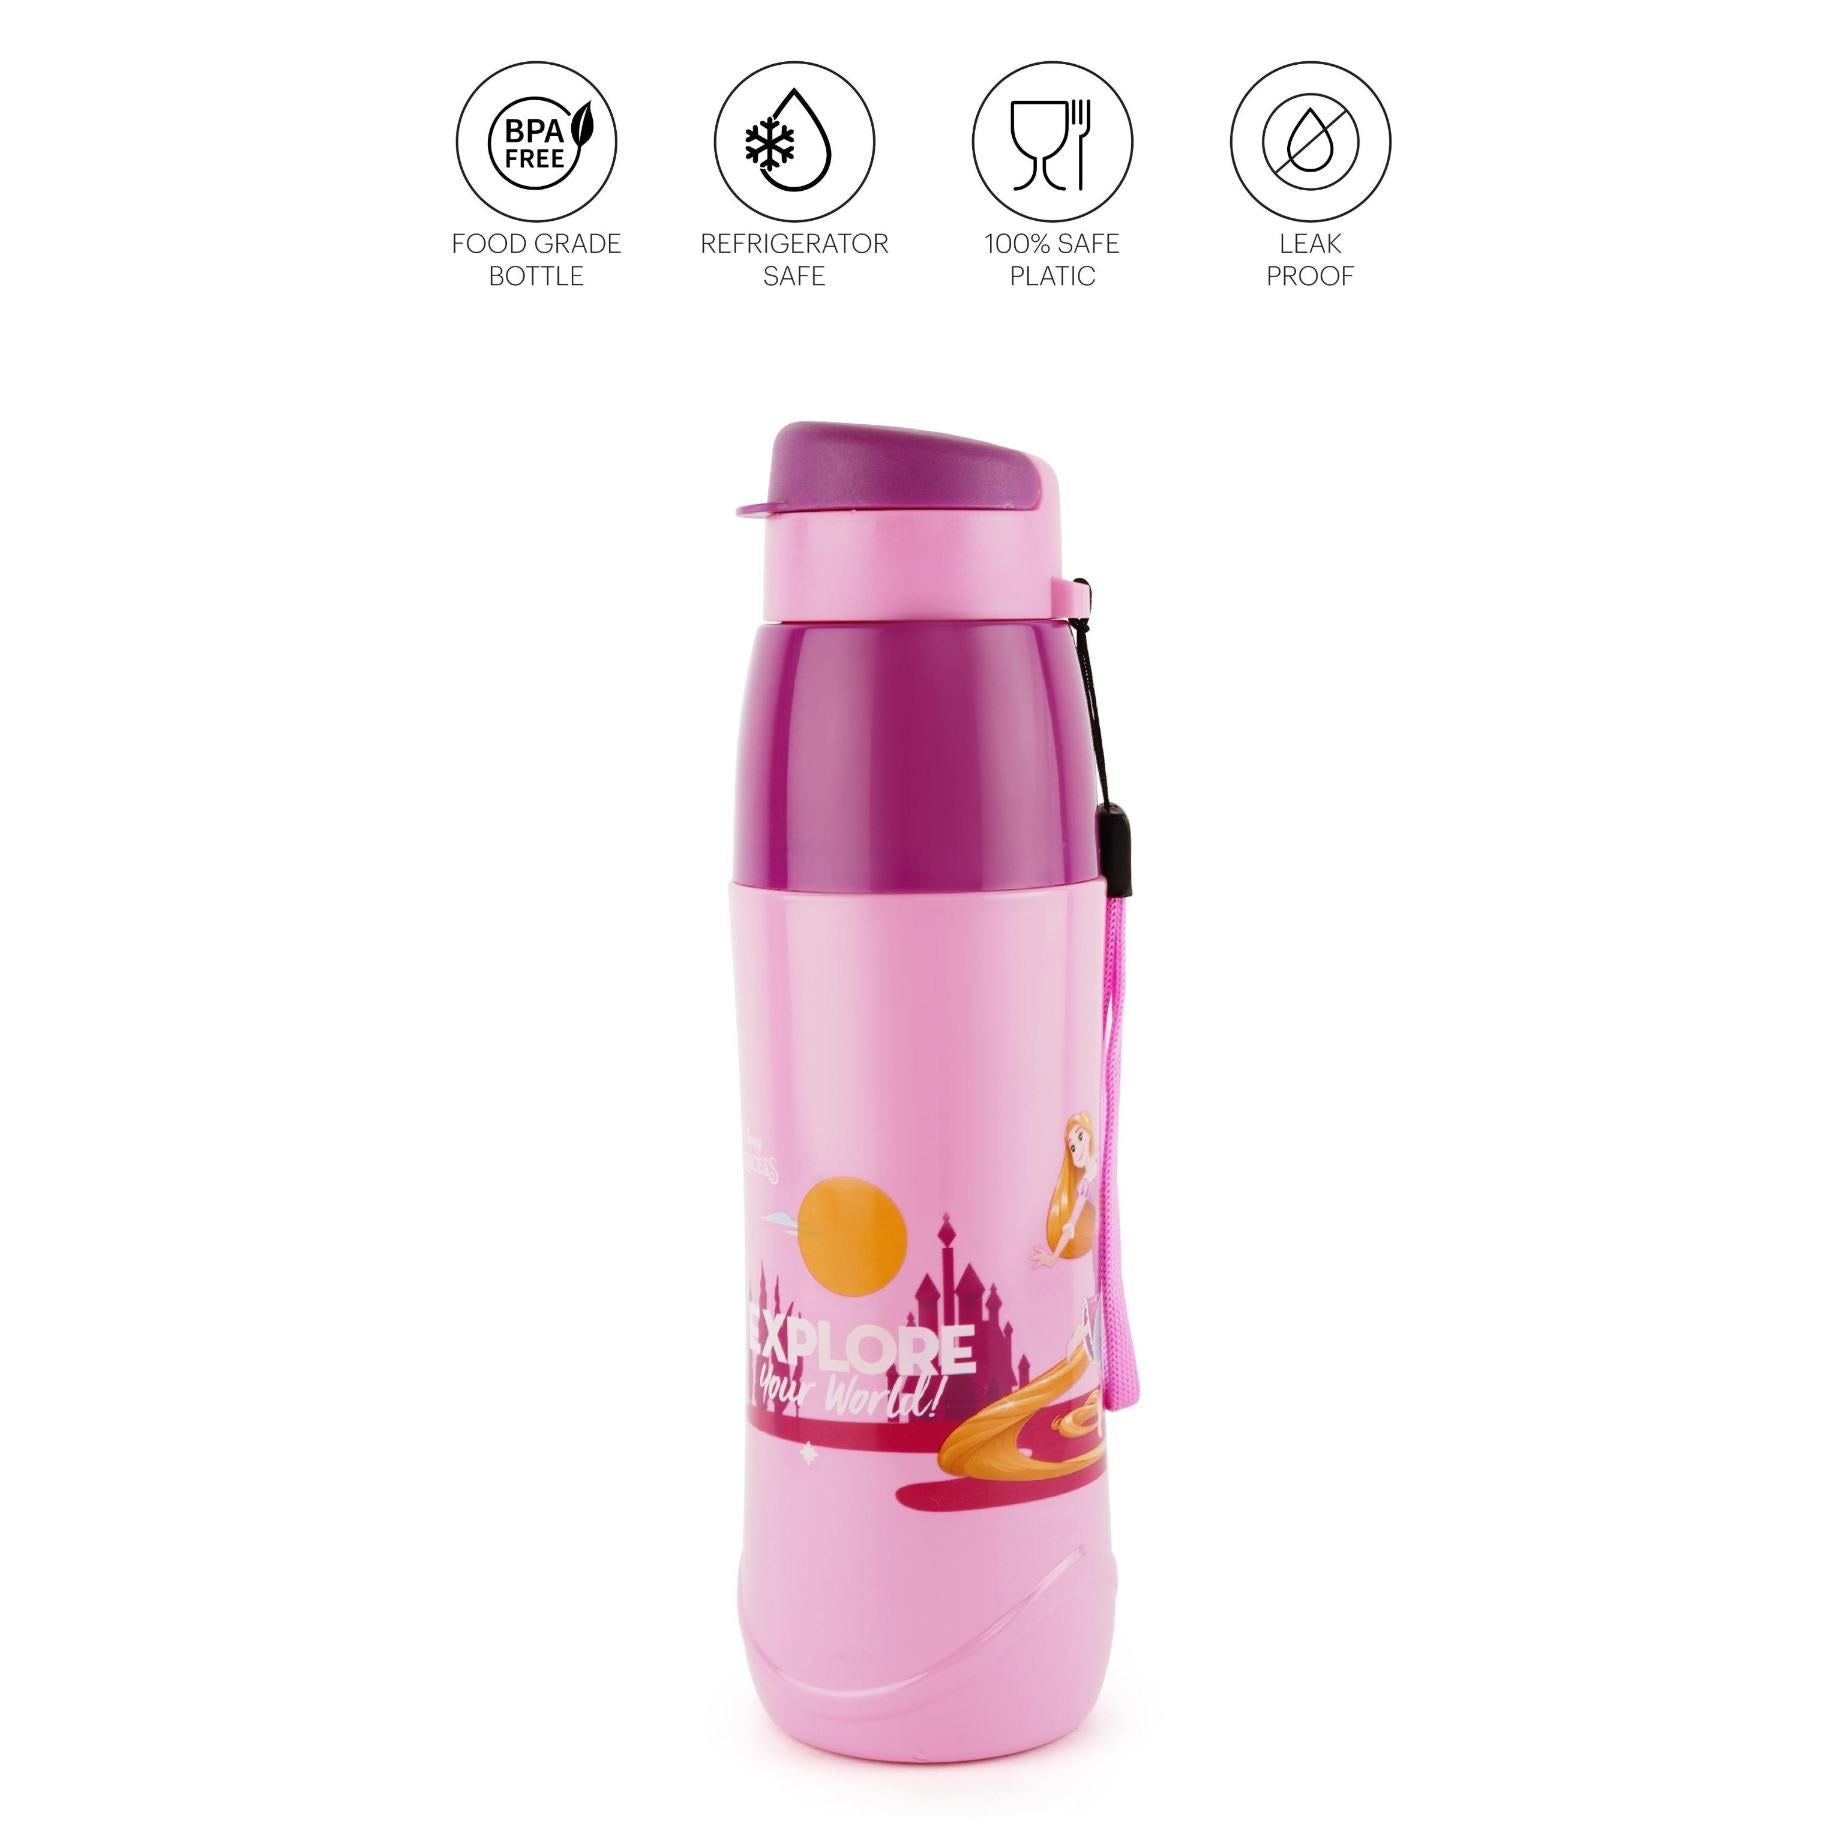 Puro Disney 900 Cold Insulated Kids Water Bottle, 715ml Pink / 715ml / Disney Princess